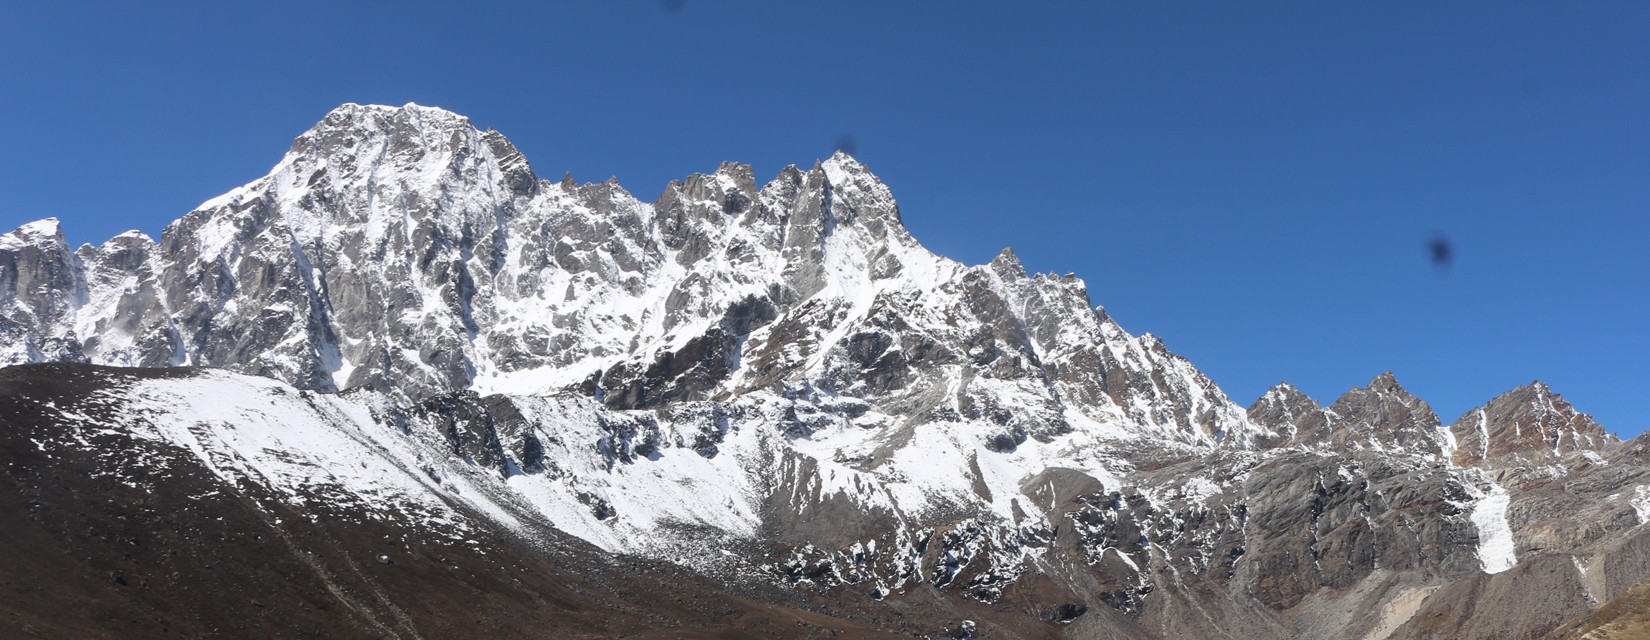 Everest Range - EBC Trek